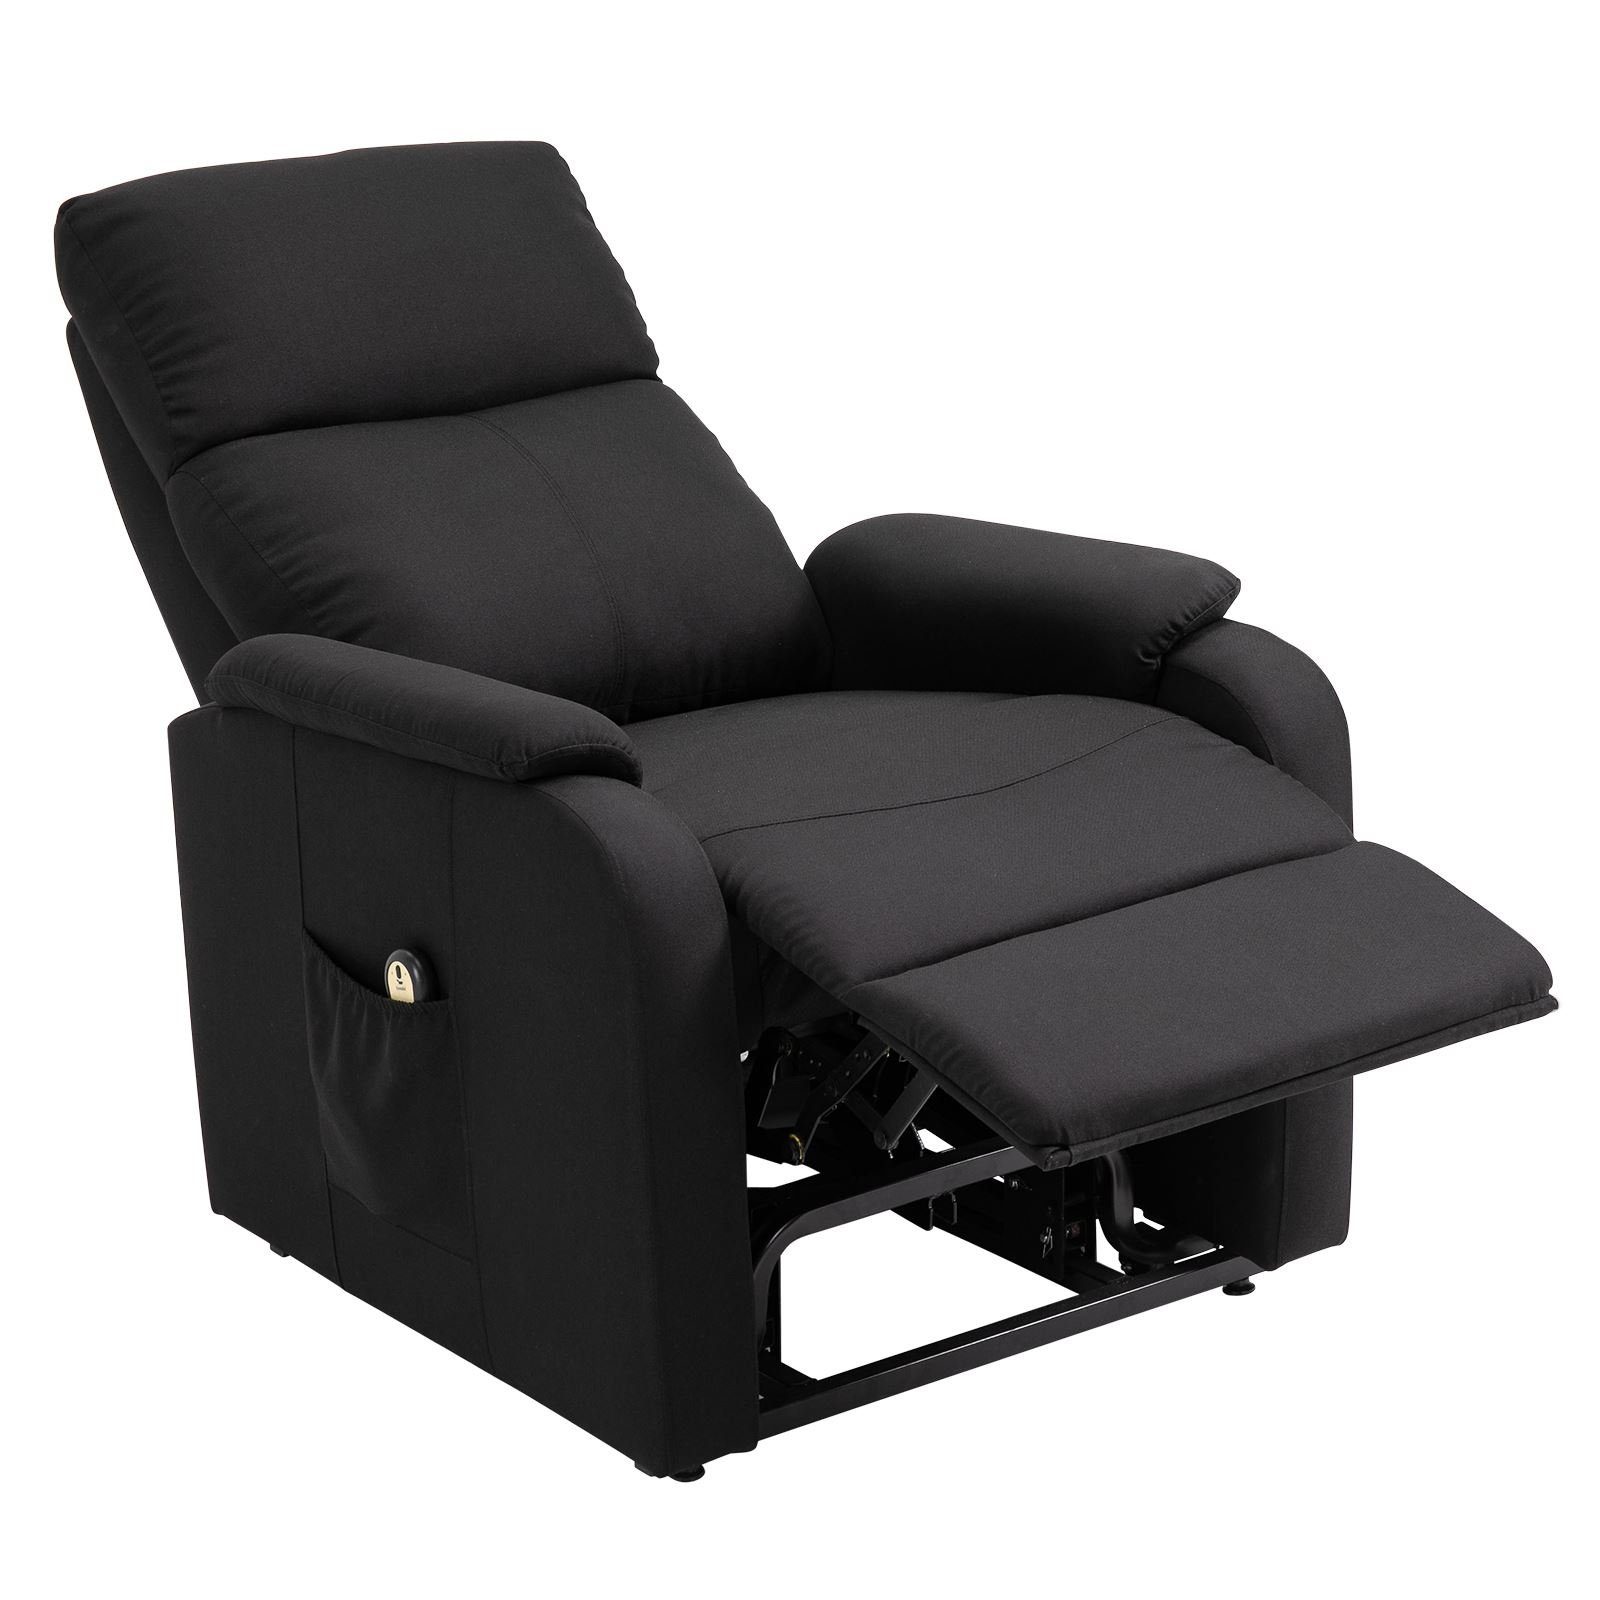 CARO-Möbel schwarz mit Ruhe elektrisc TV-Sessel Aufstehfunktion TV Relaxsessel Fernsehsessel Sessel RETIRE,